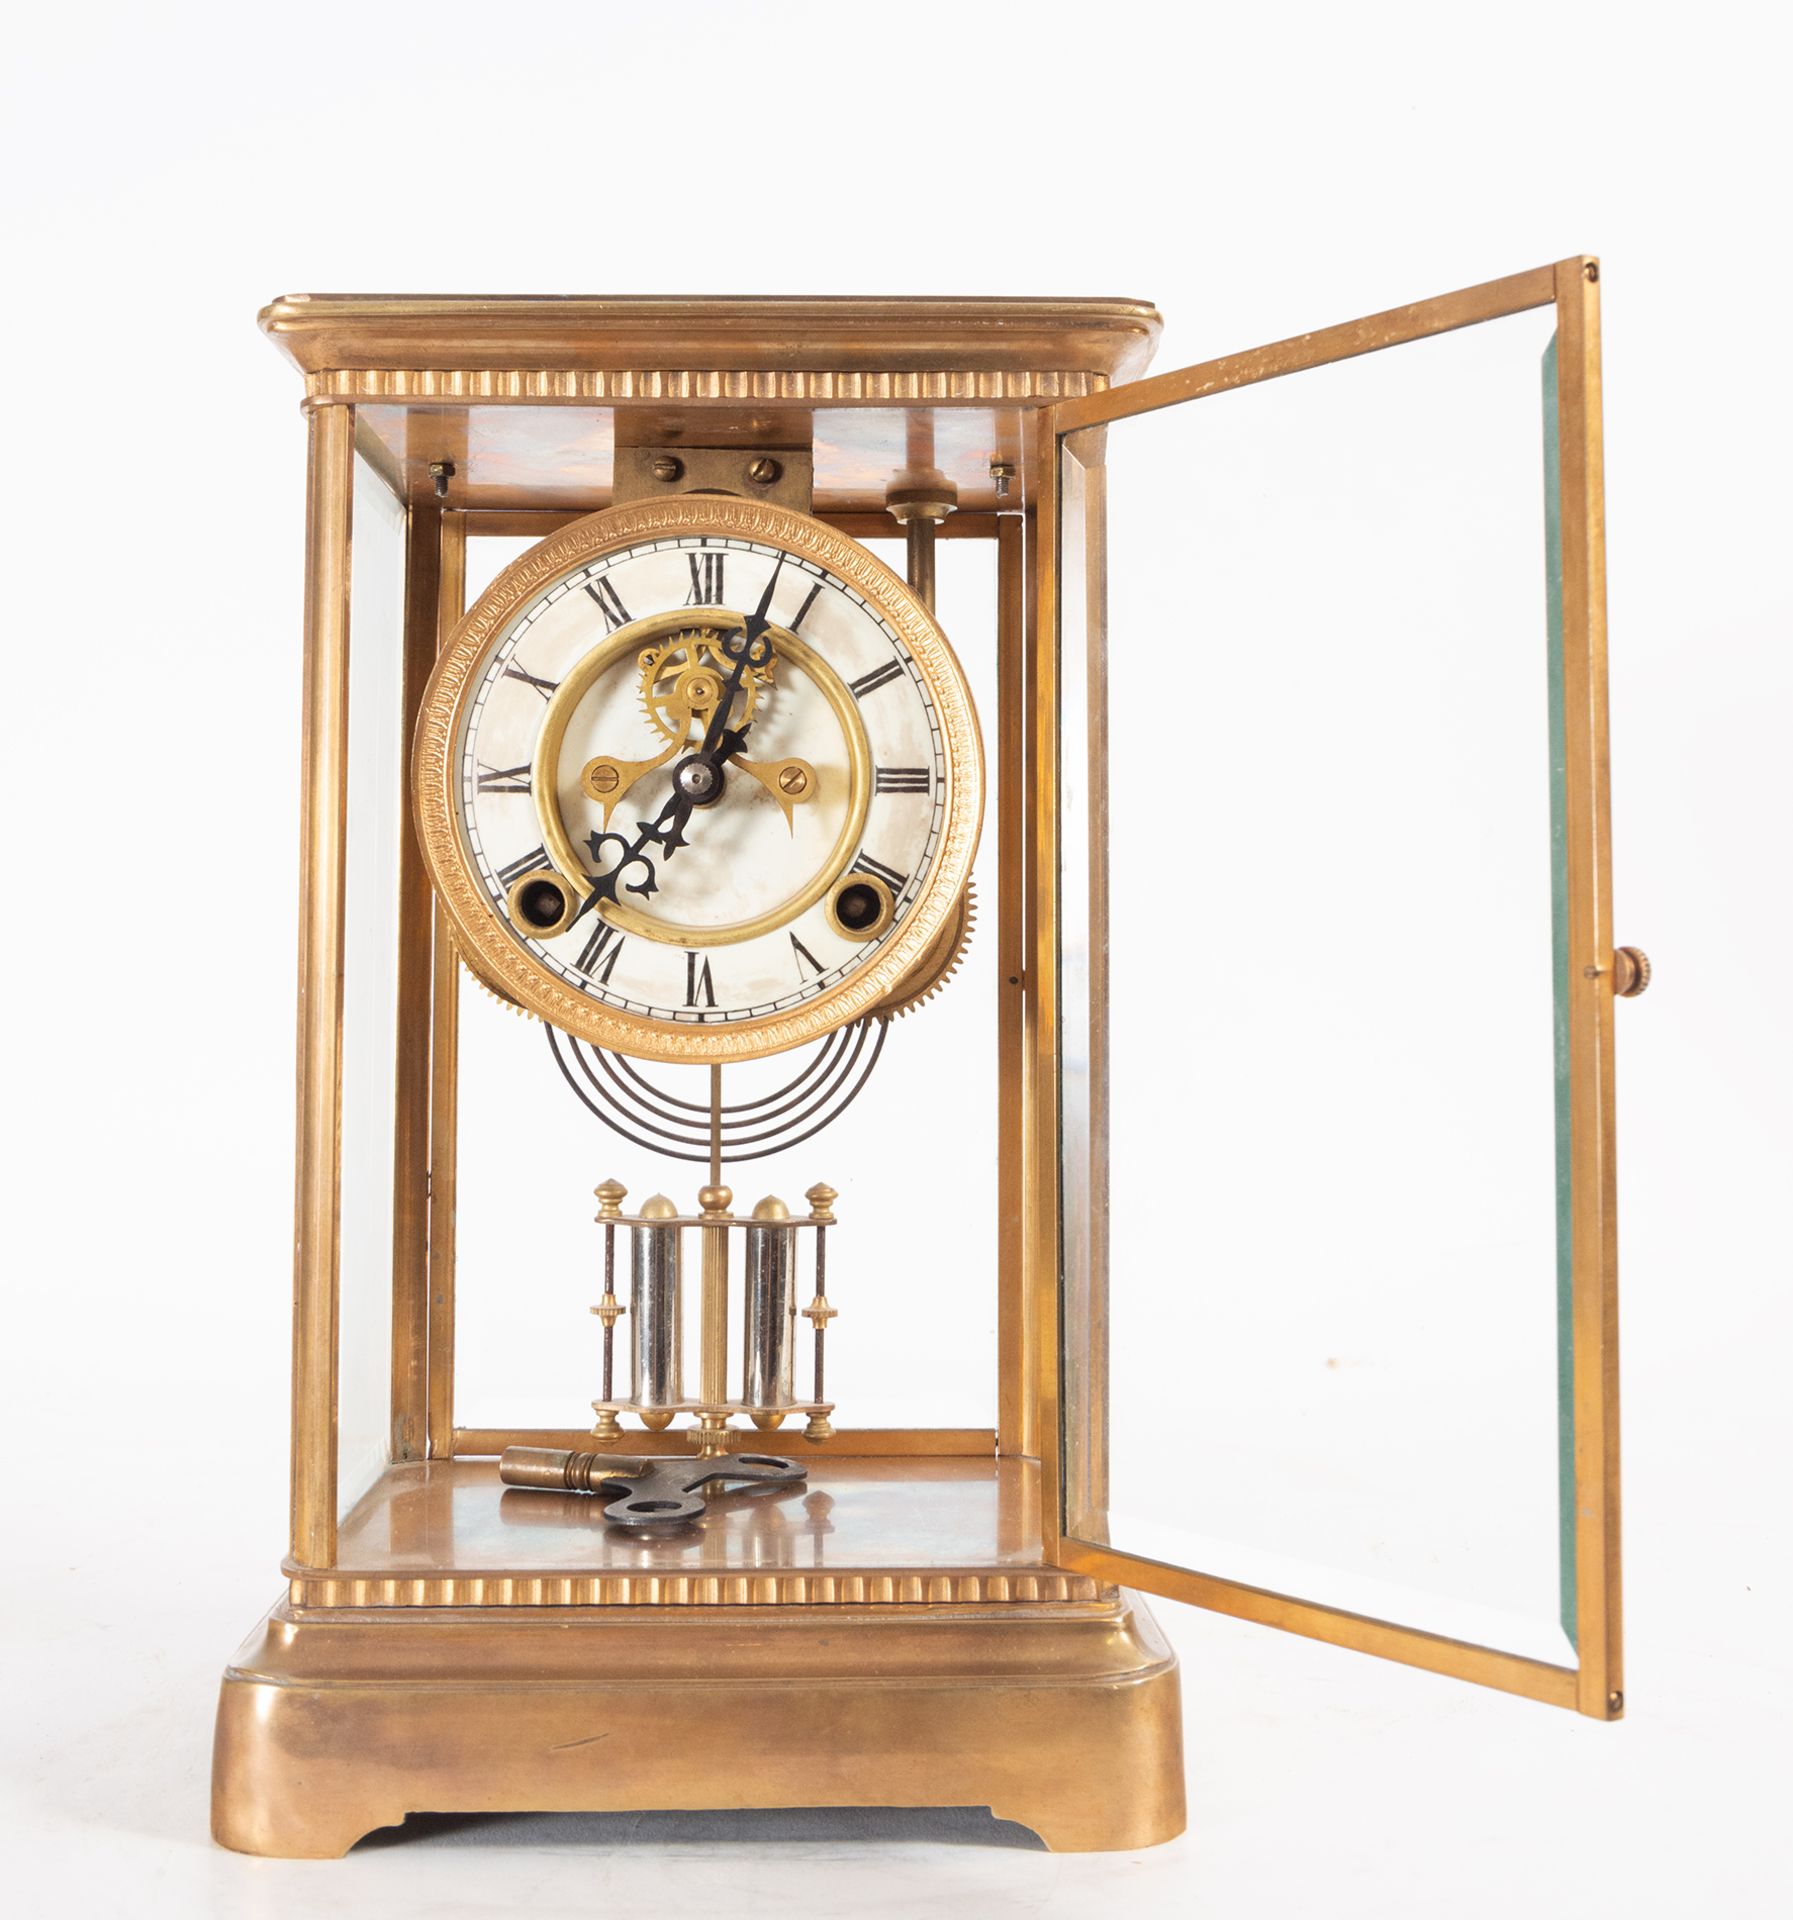 Tabletop Clock with Mercury pendulum, France, 19th century - Image 2 of 5